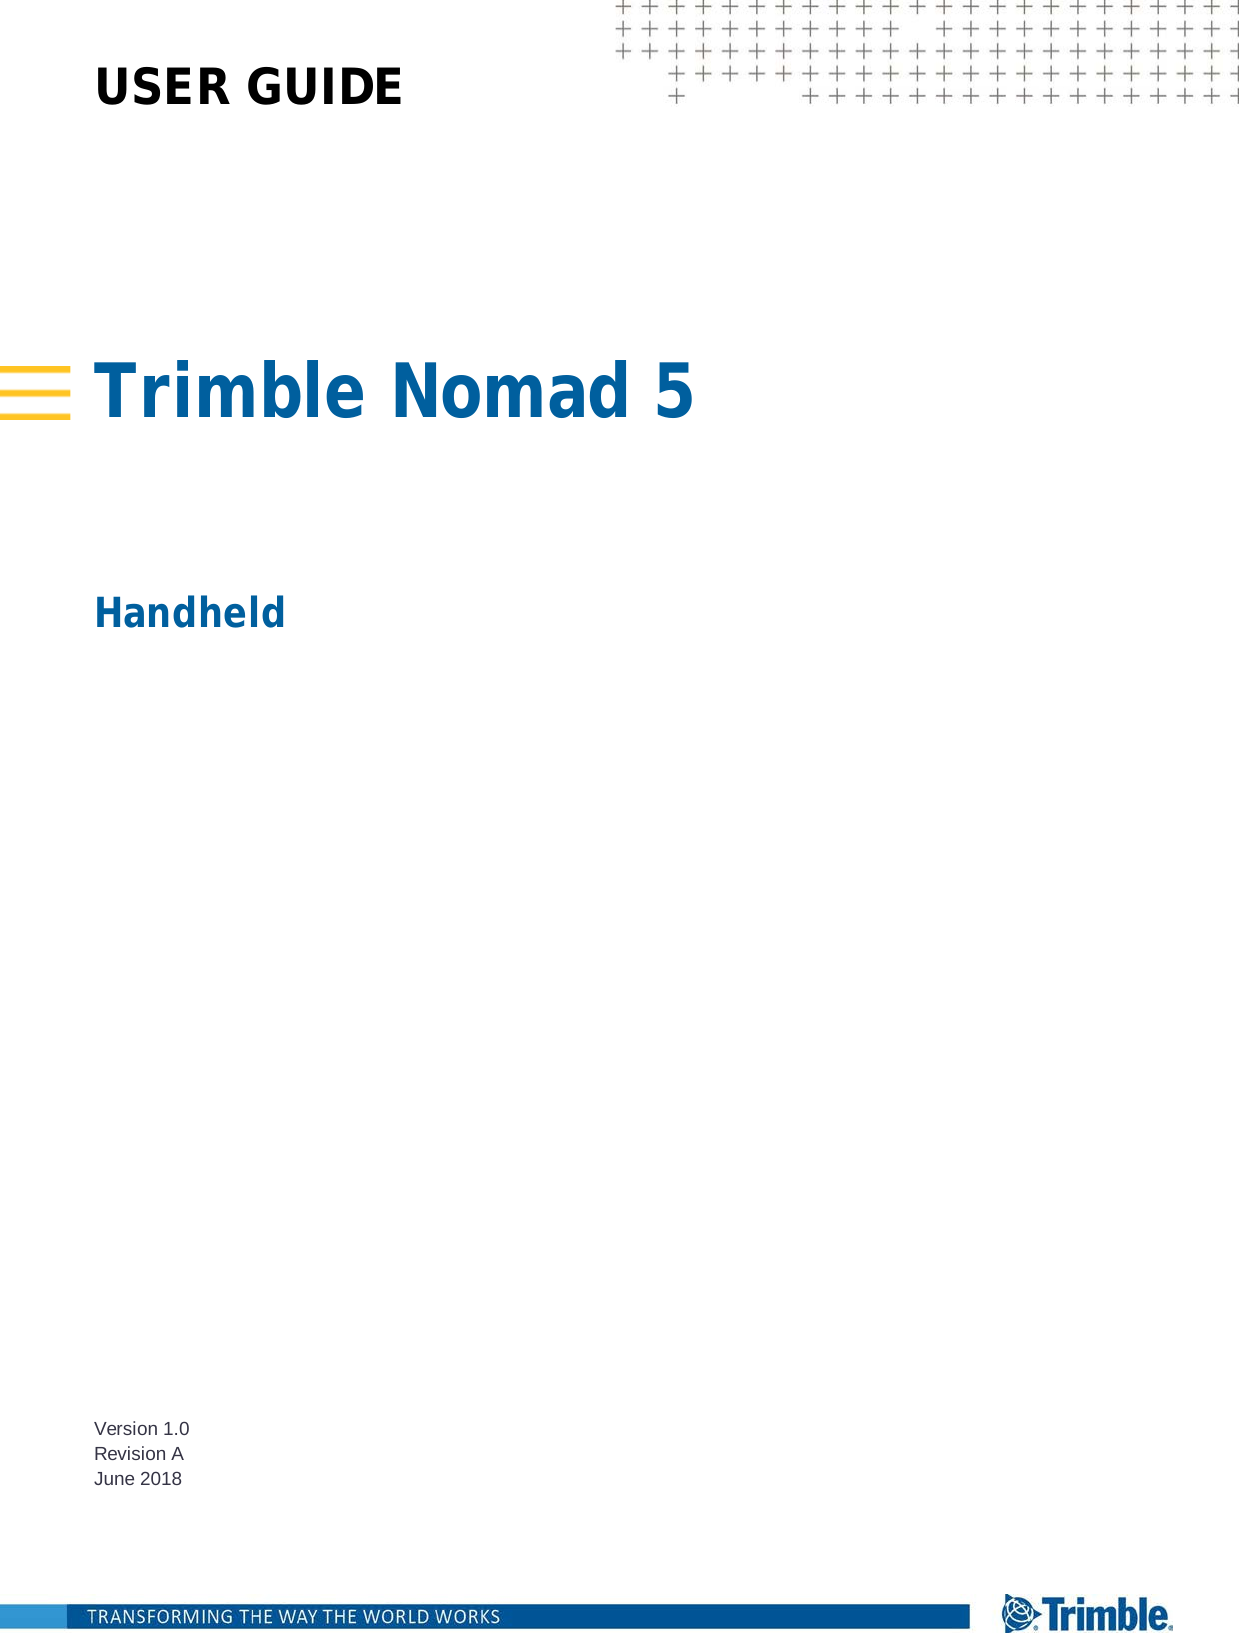  USER GUIDE        Trimble Nomad 5  Handheld                                 Version 1.0 Revision A June 2018     